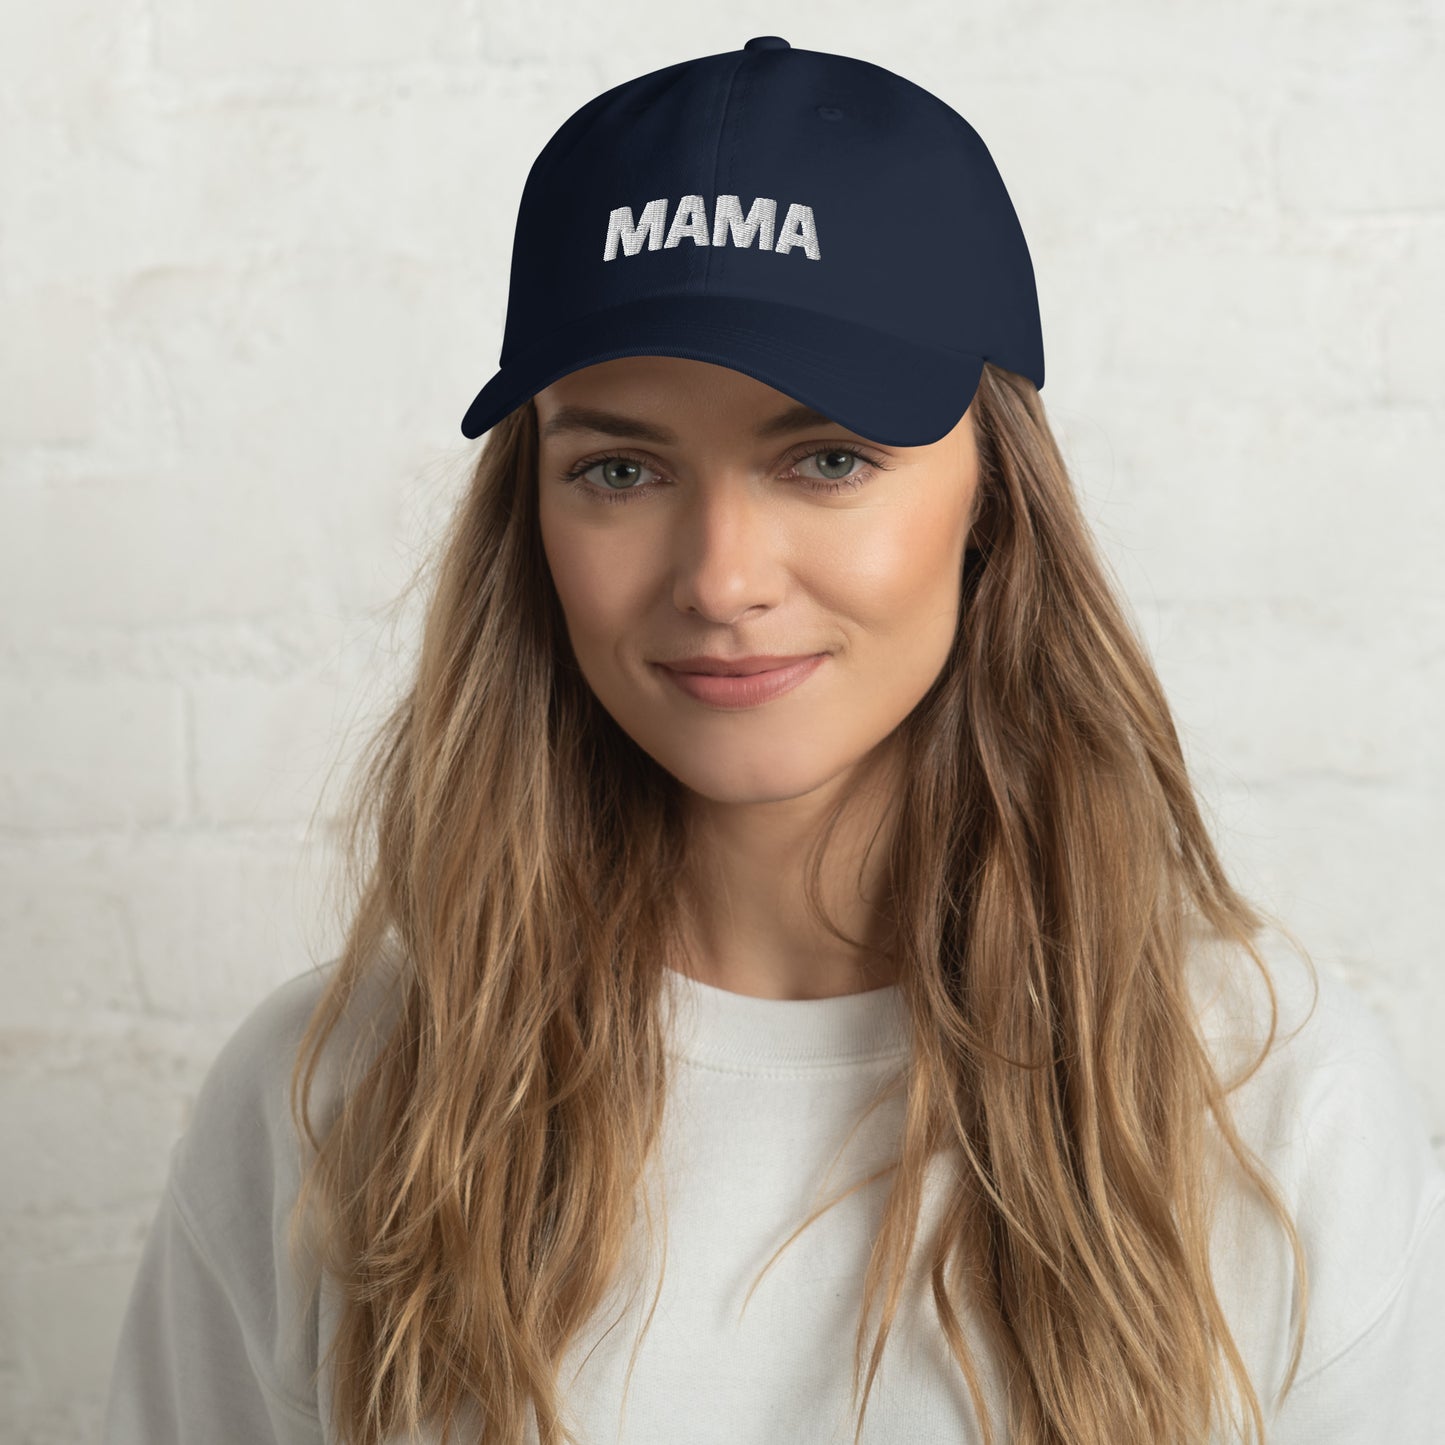 "MAMA" DAD HAT